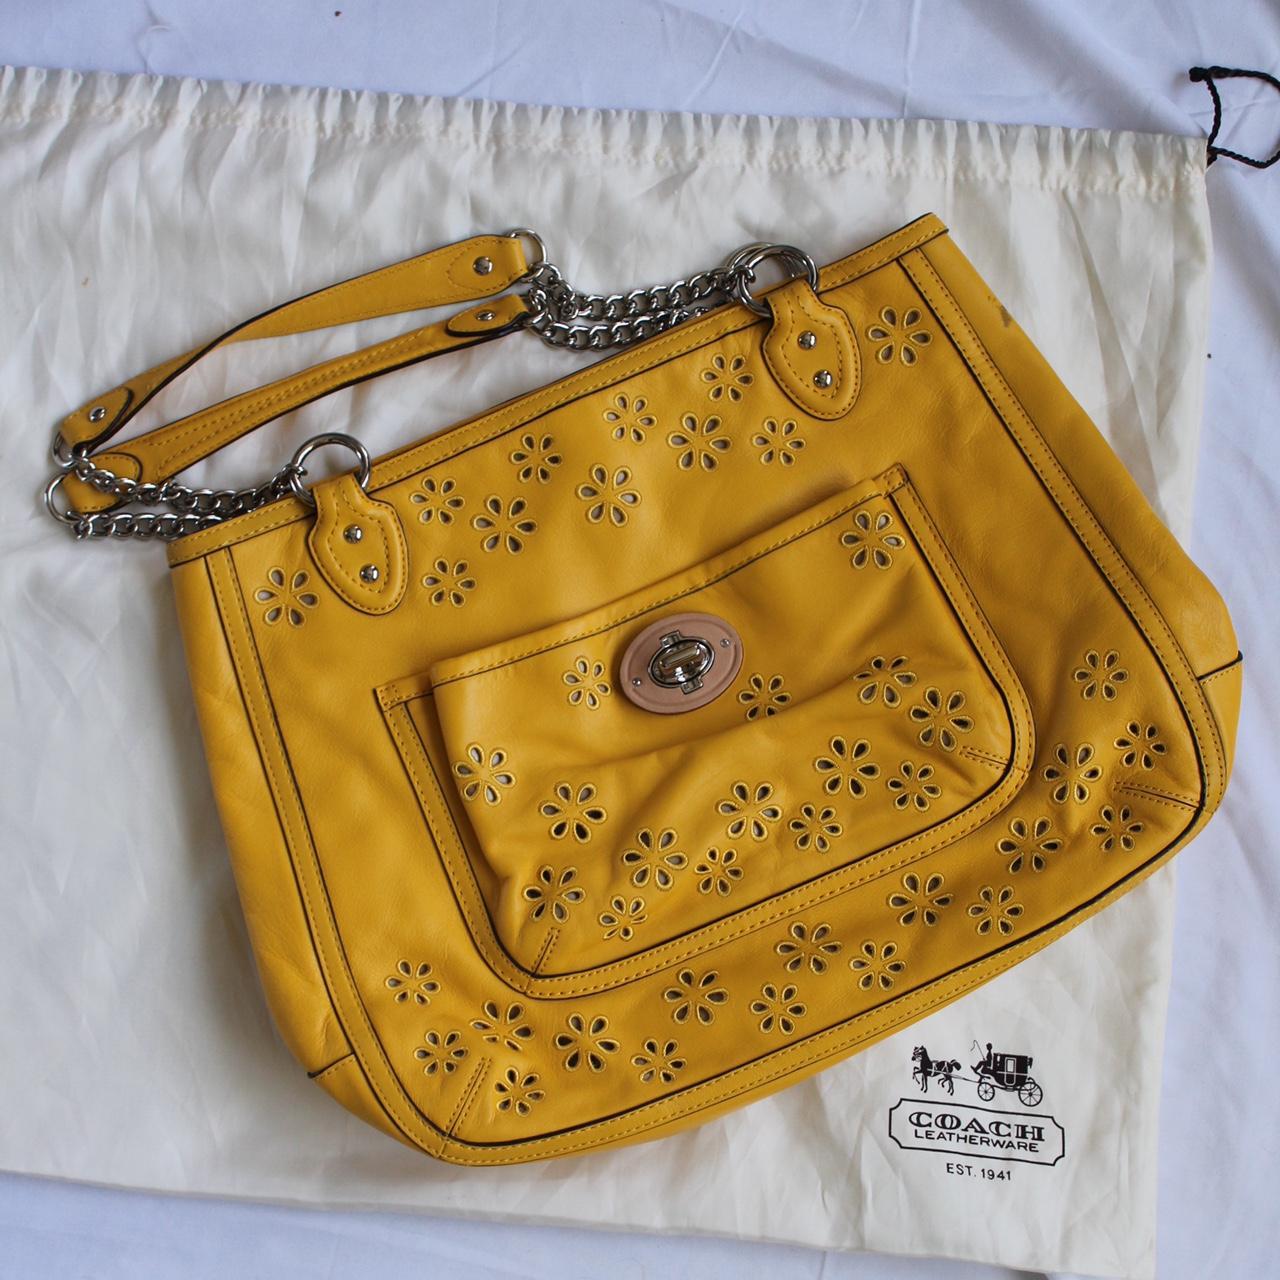 yellow coach bag. #purse #coach - Depop